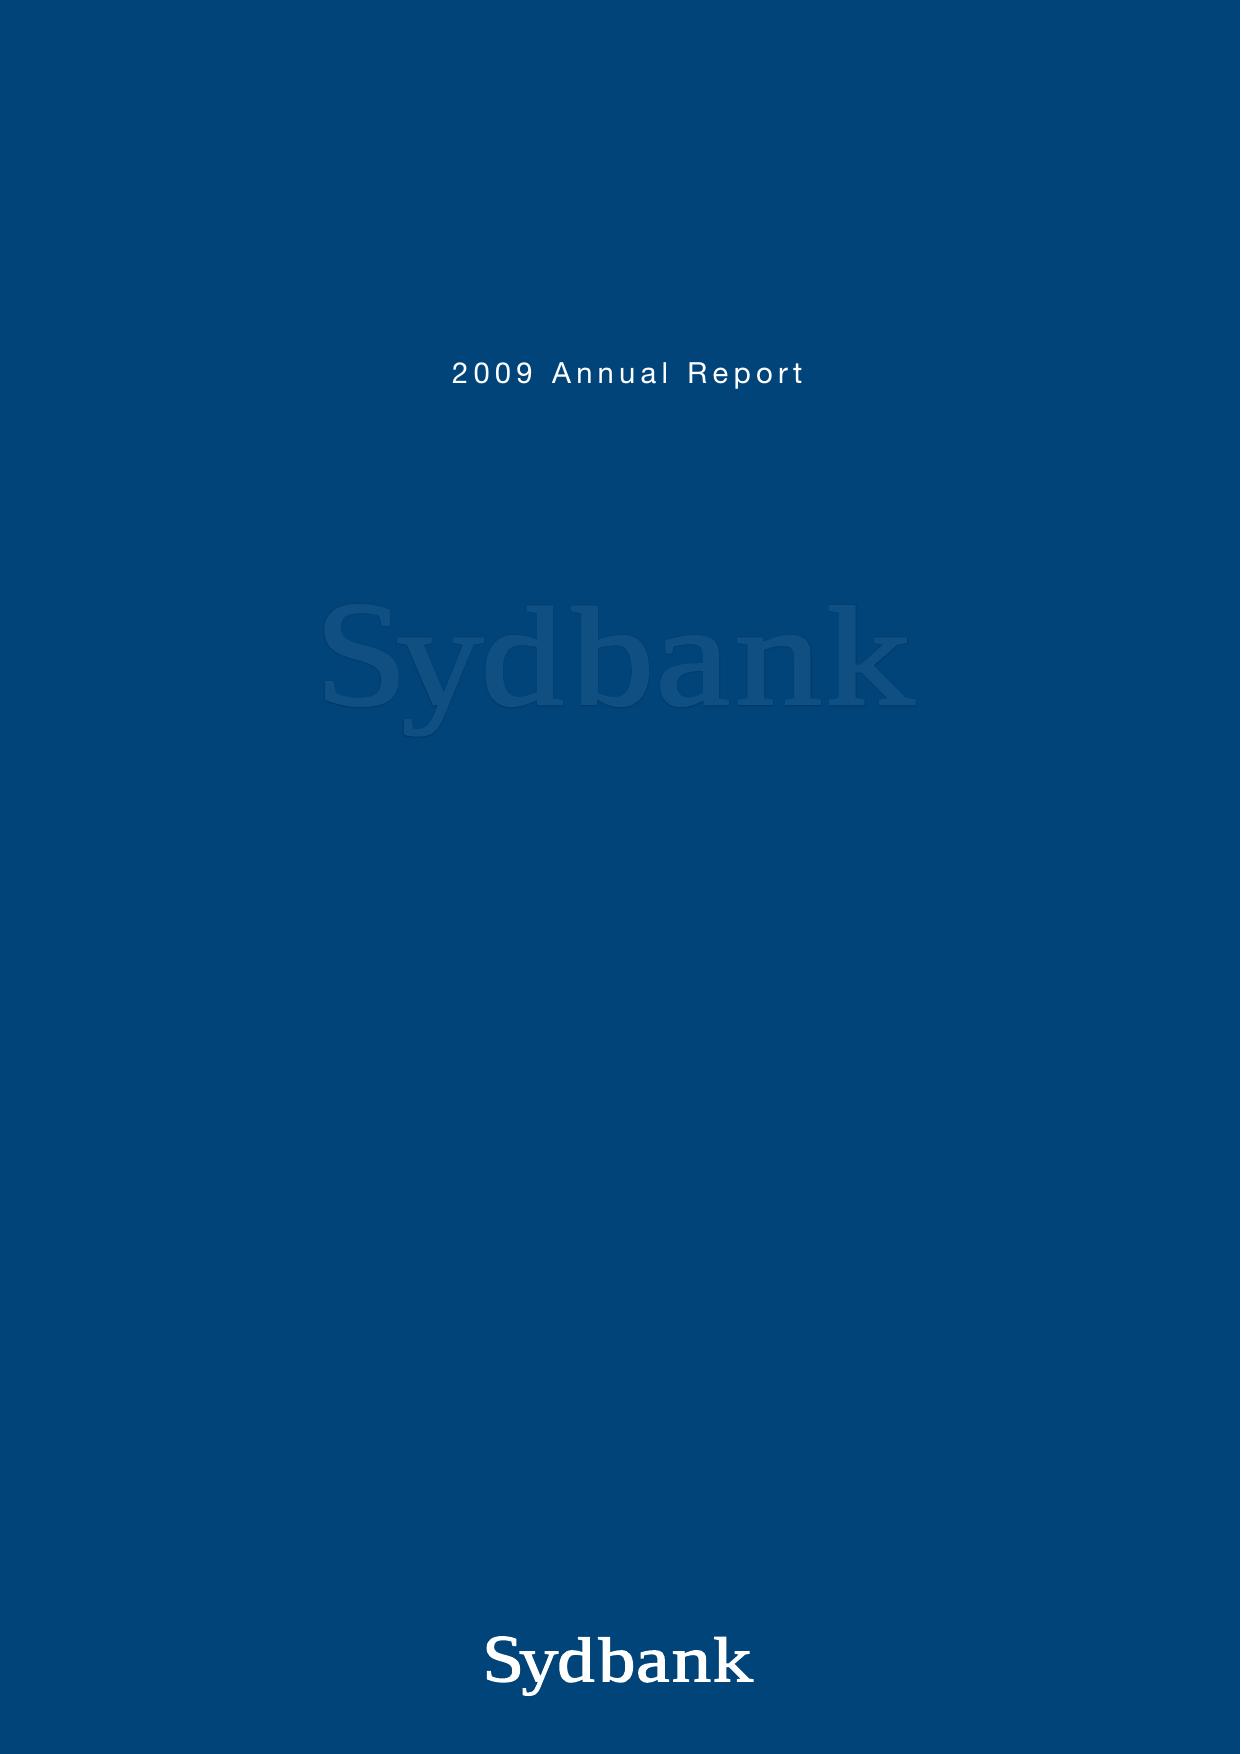 SYDBANK Annual Report